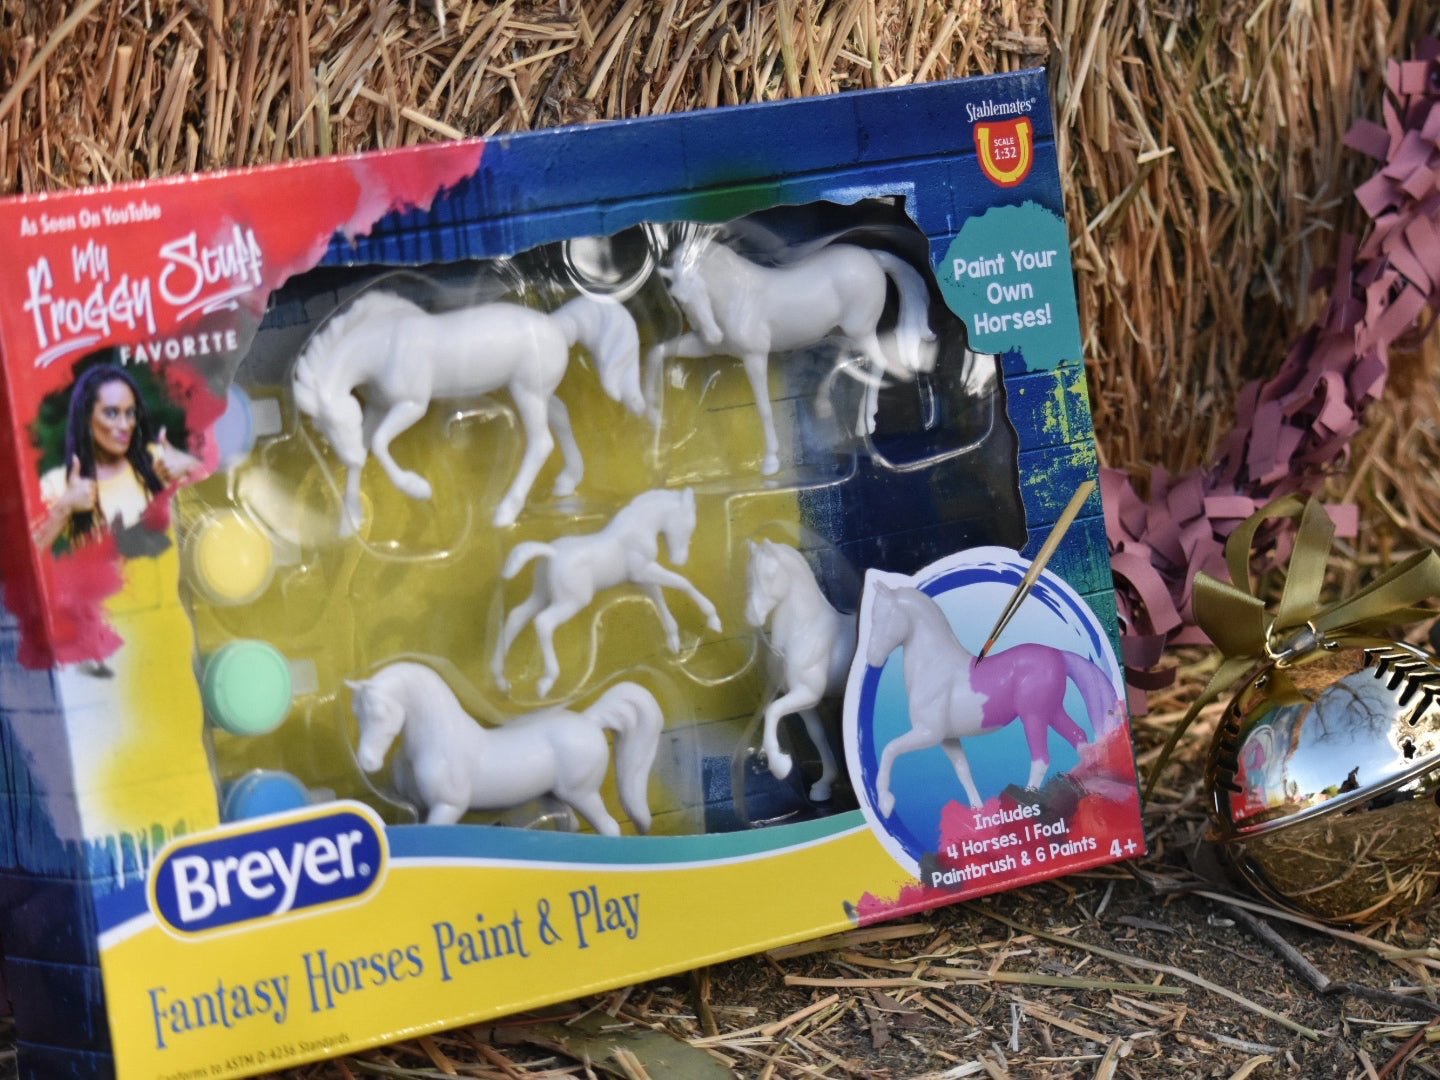 Breyer Fantasy Horses Paint & Play Kids Activity Set